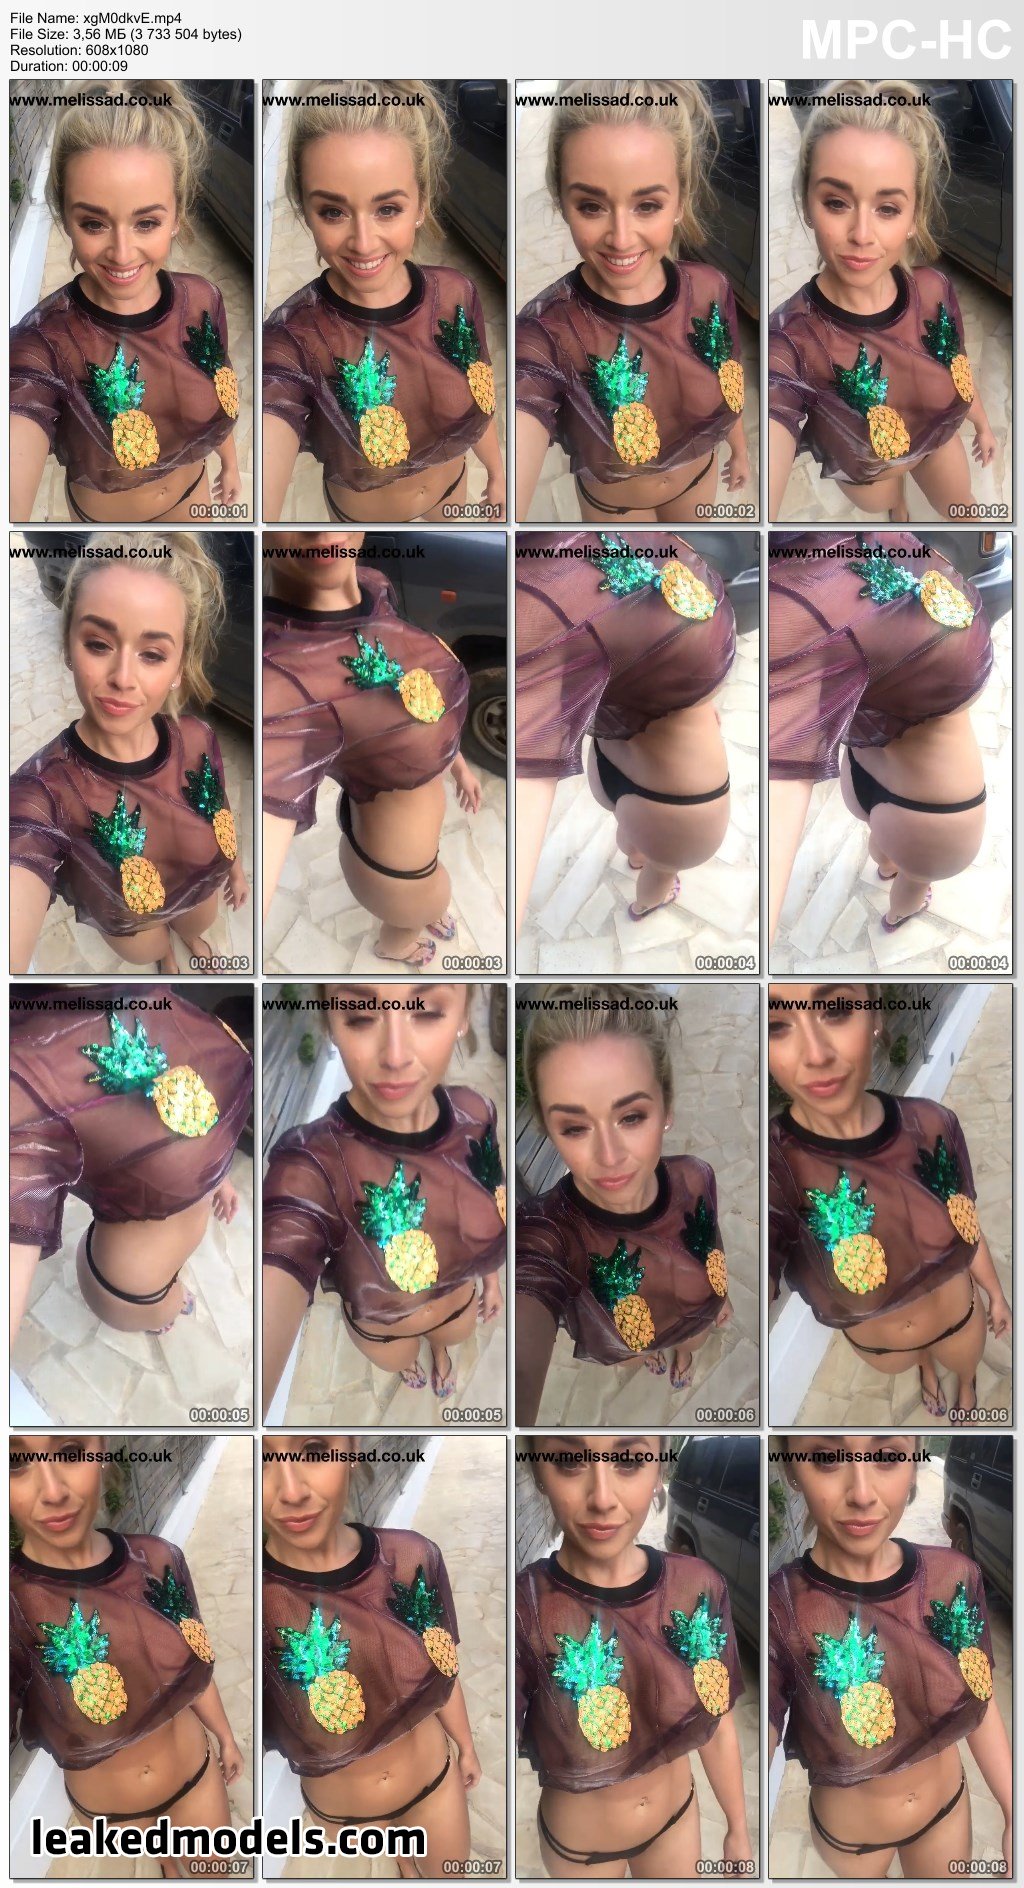 melissa debling leaked nude leakedmodels.com 0007 - Melissa Debling Instagram Nude Leaks (27 Photos)